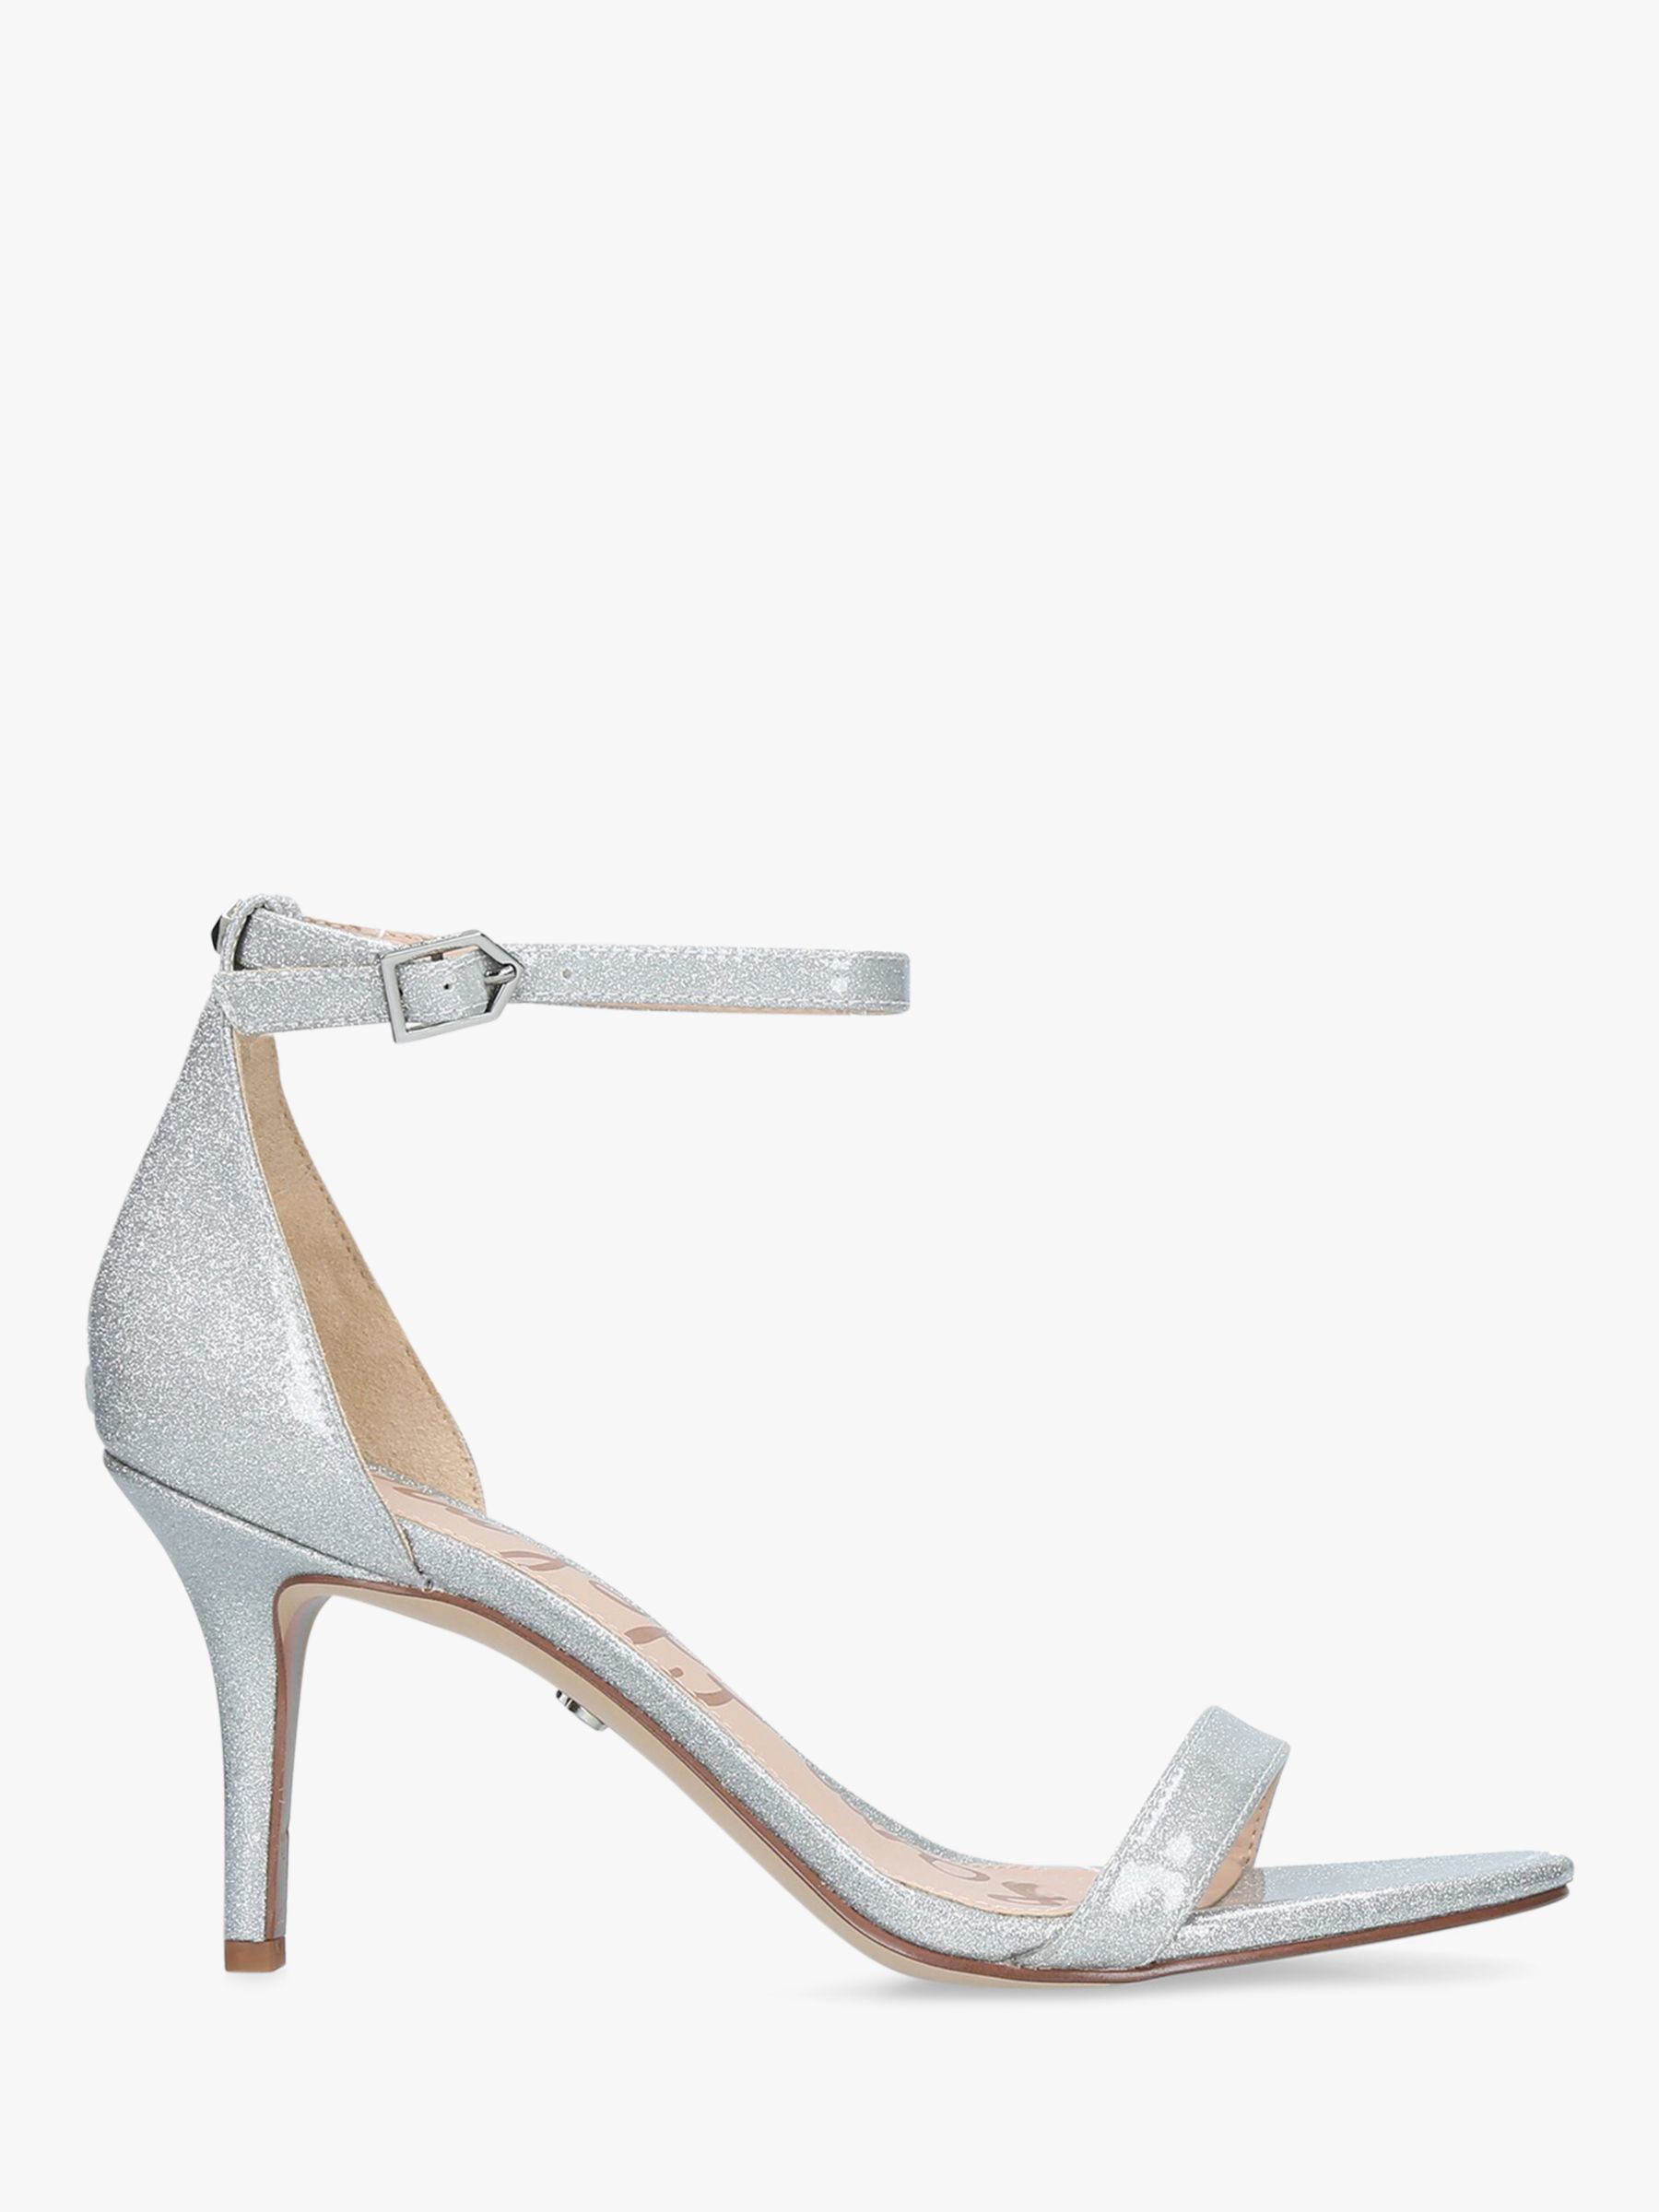 Sam Edelman Patti Ankle Strap Heeled Sandals, Silver